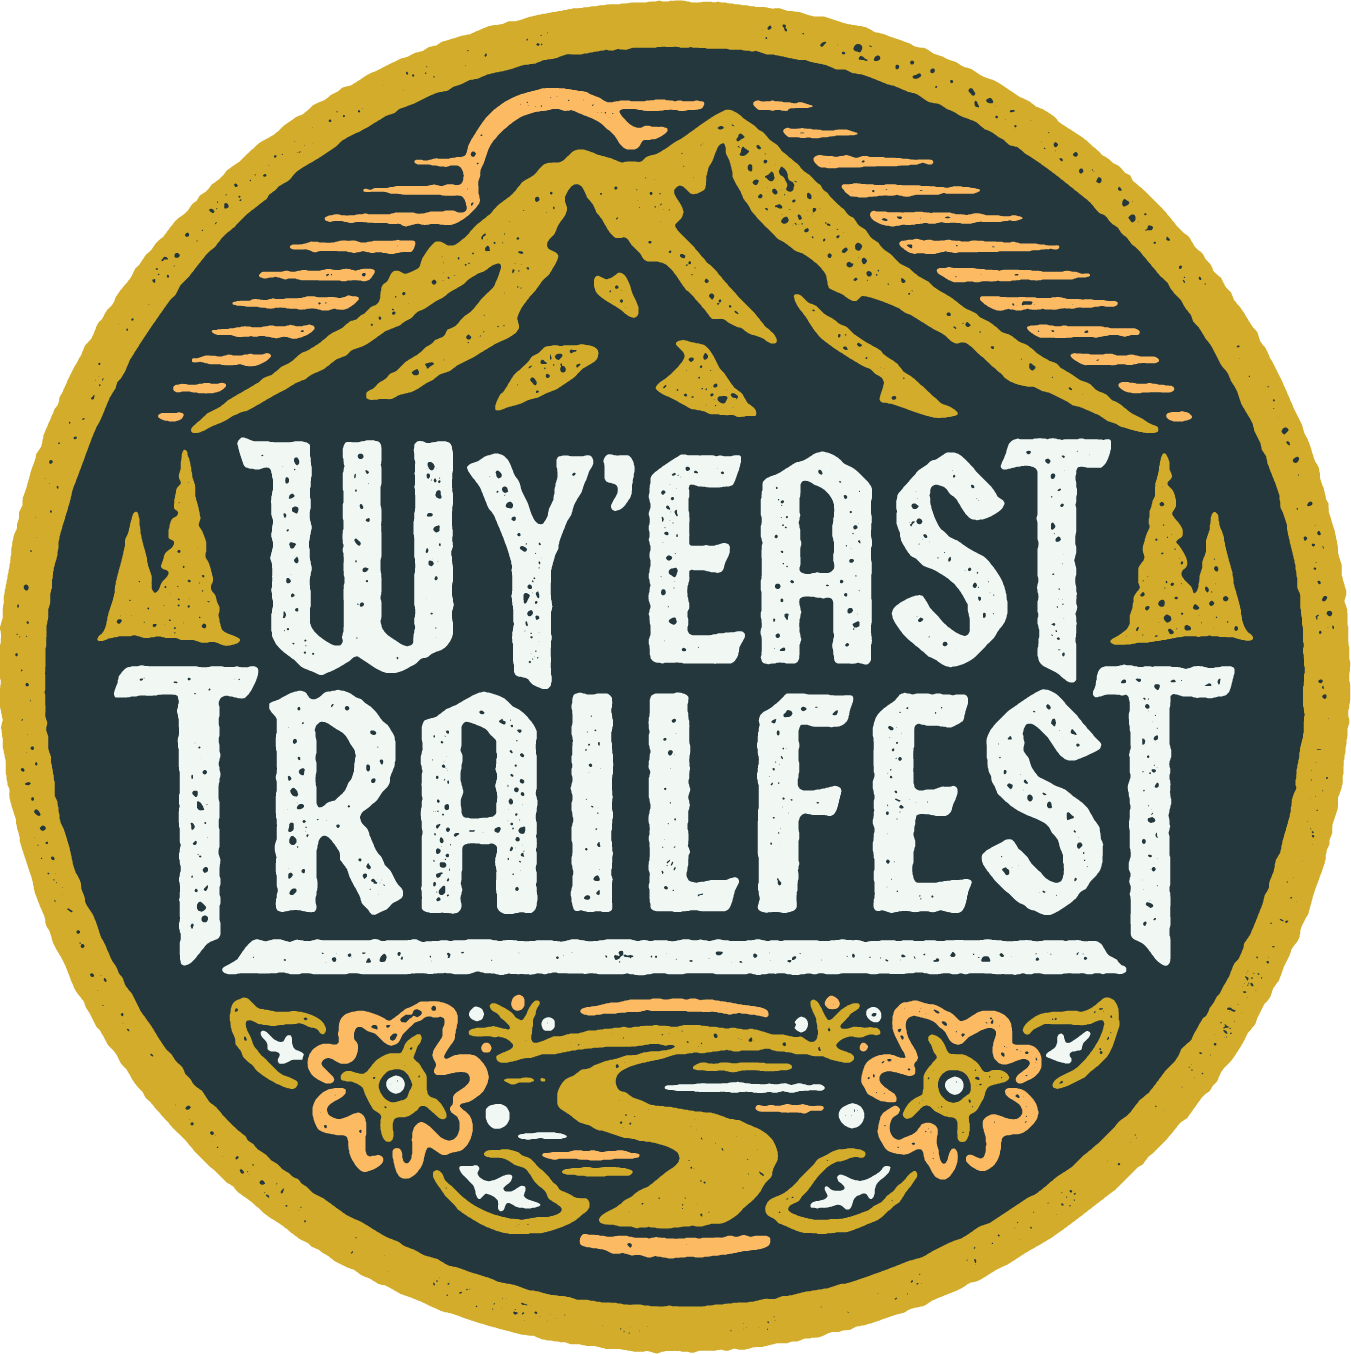 Wyeast Trailfest